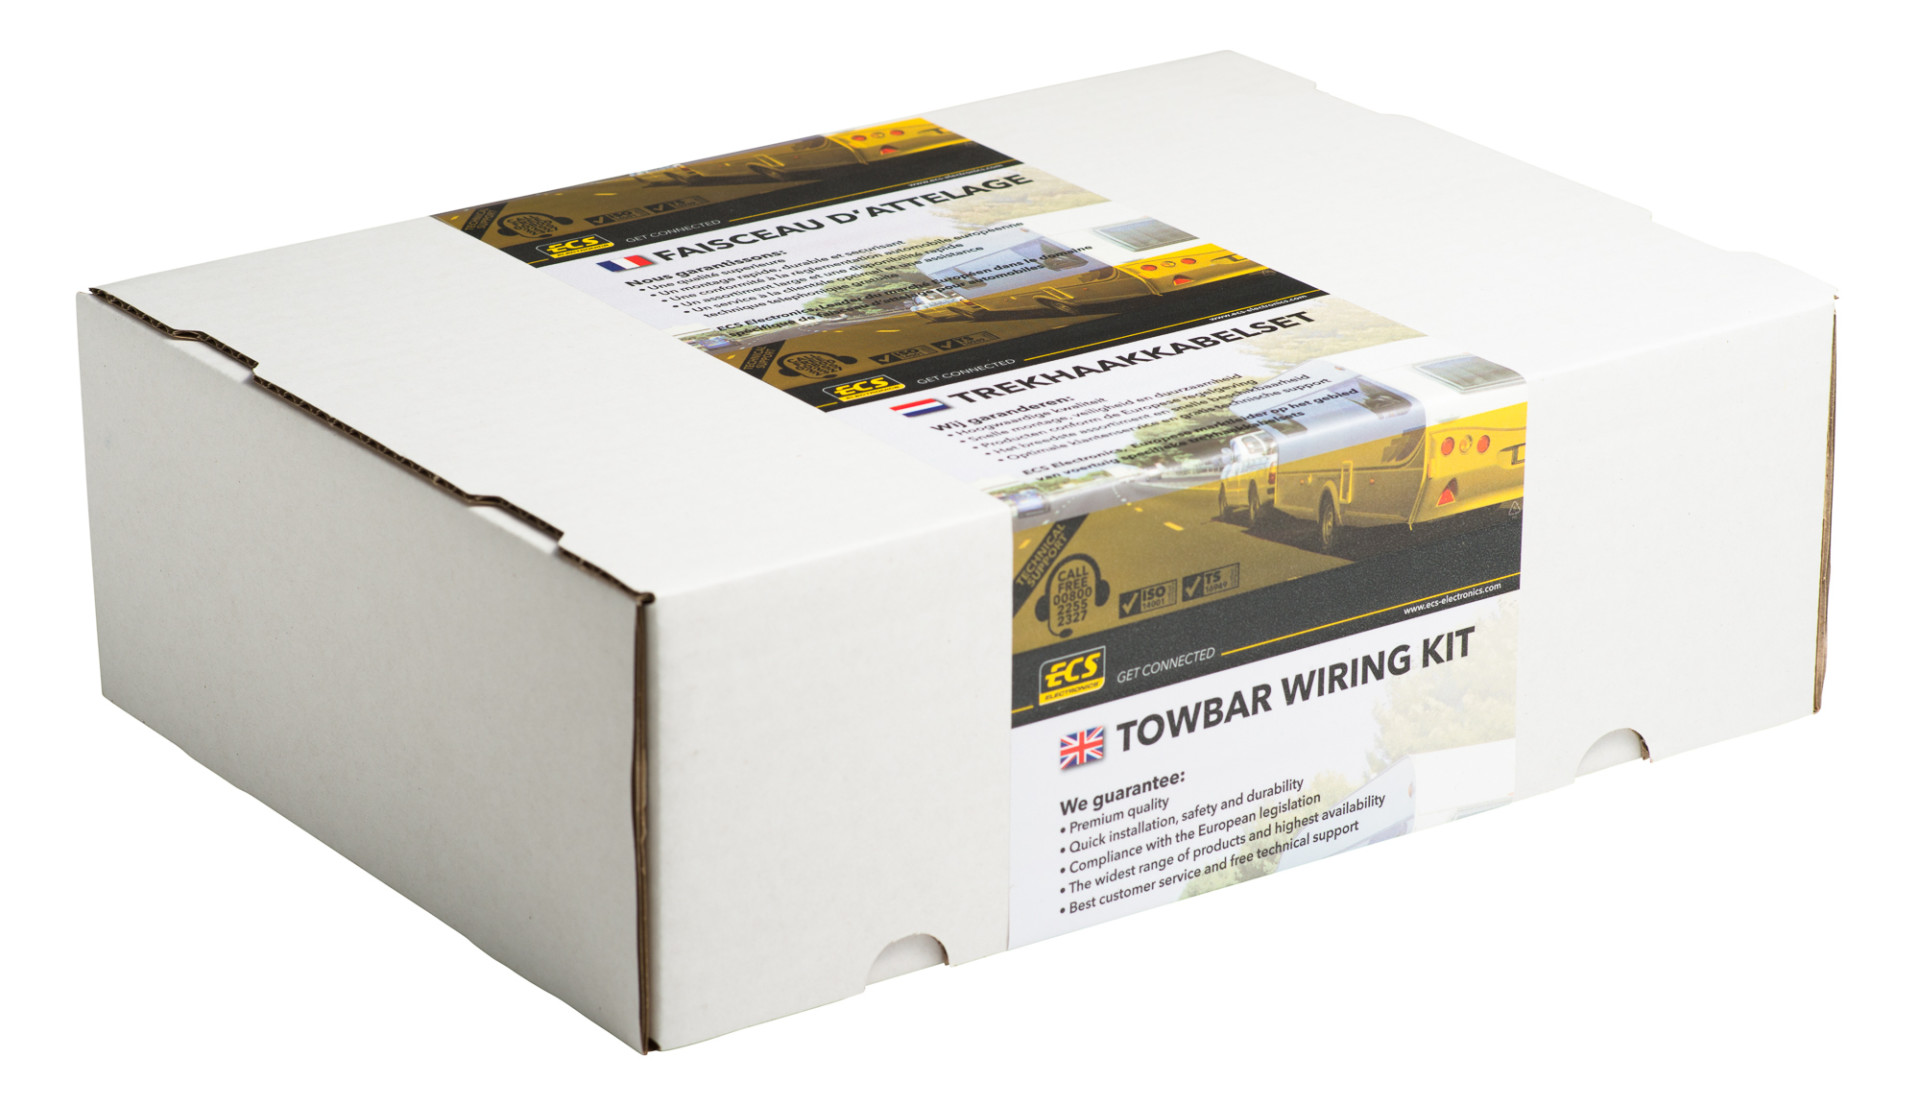 Towbar-wiring-kit-e-commerce-0035d5